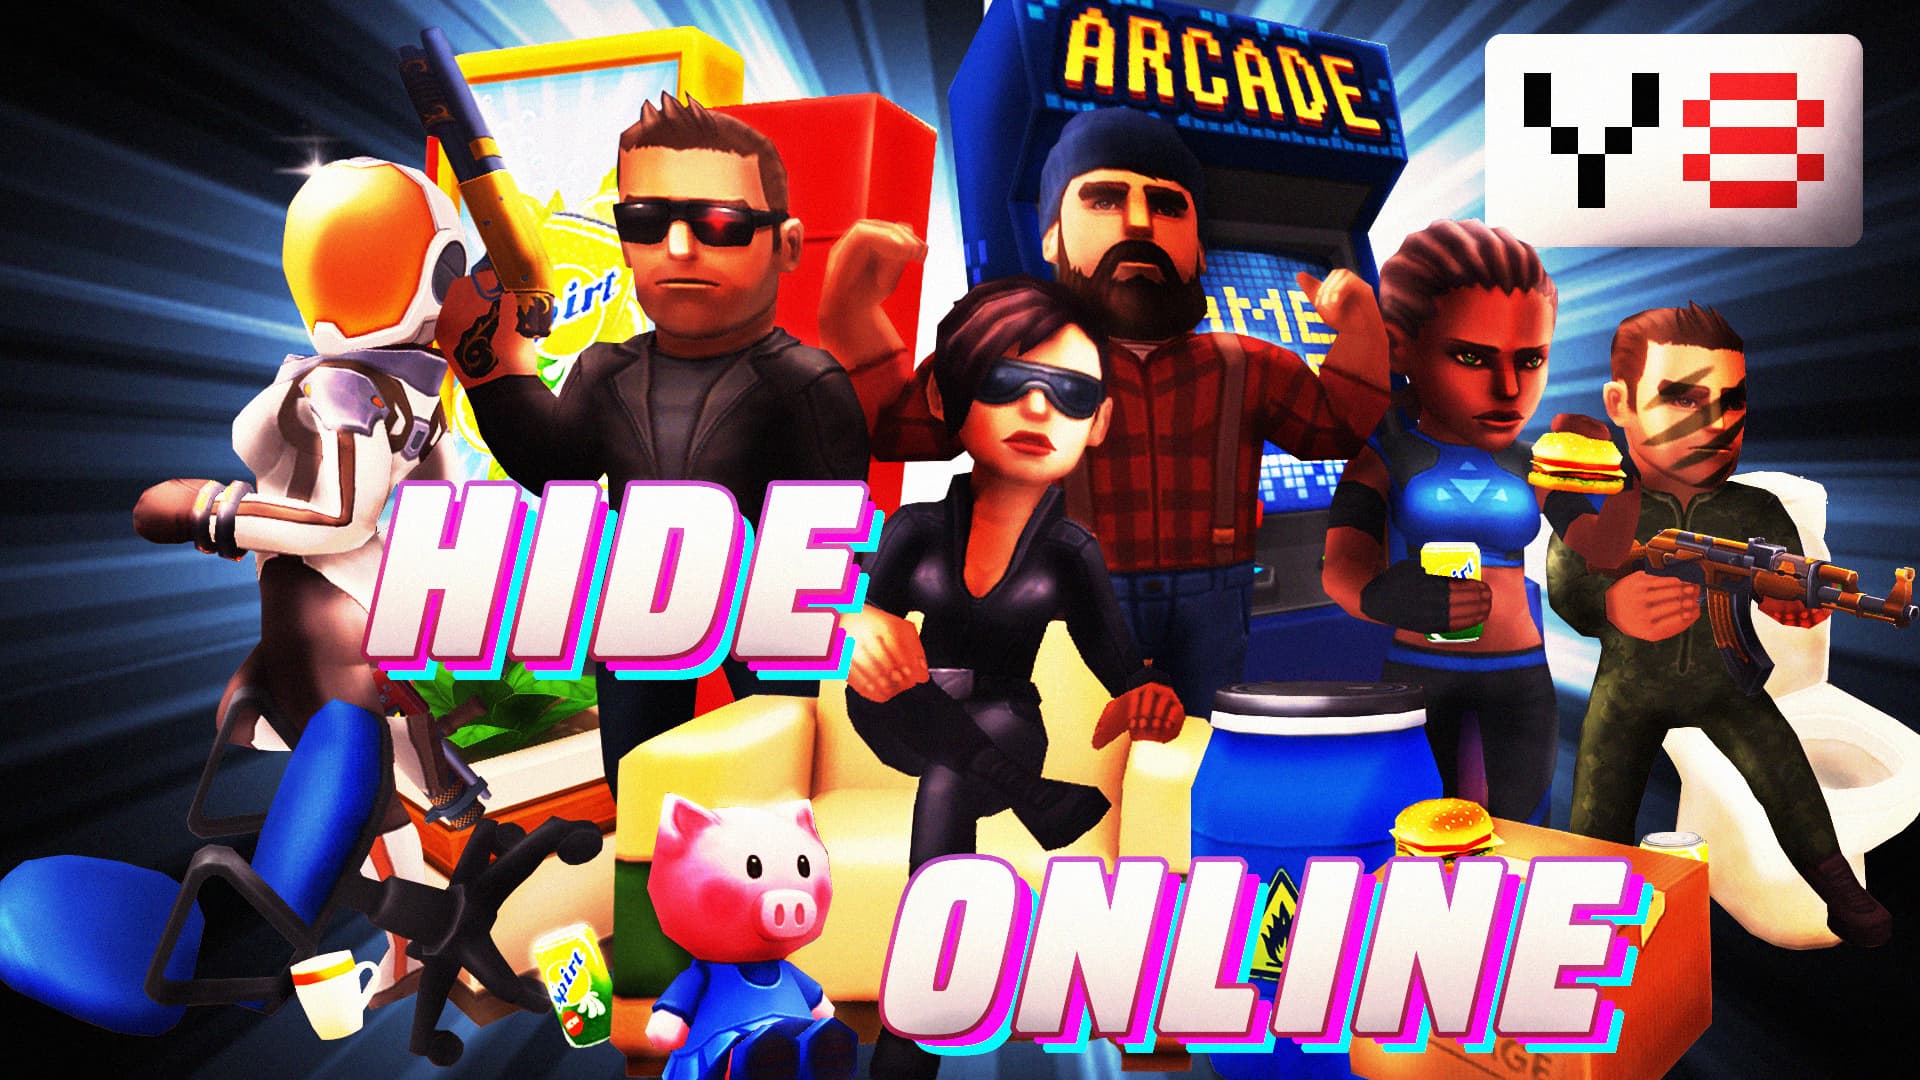 Hide Online Game - Play Online